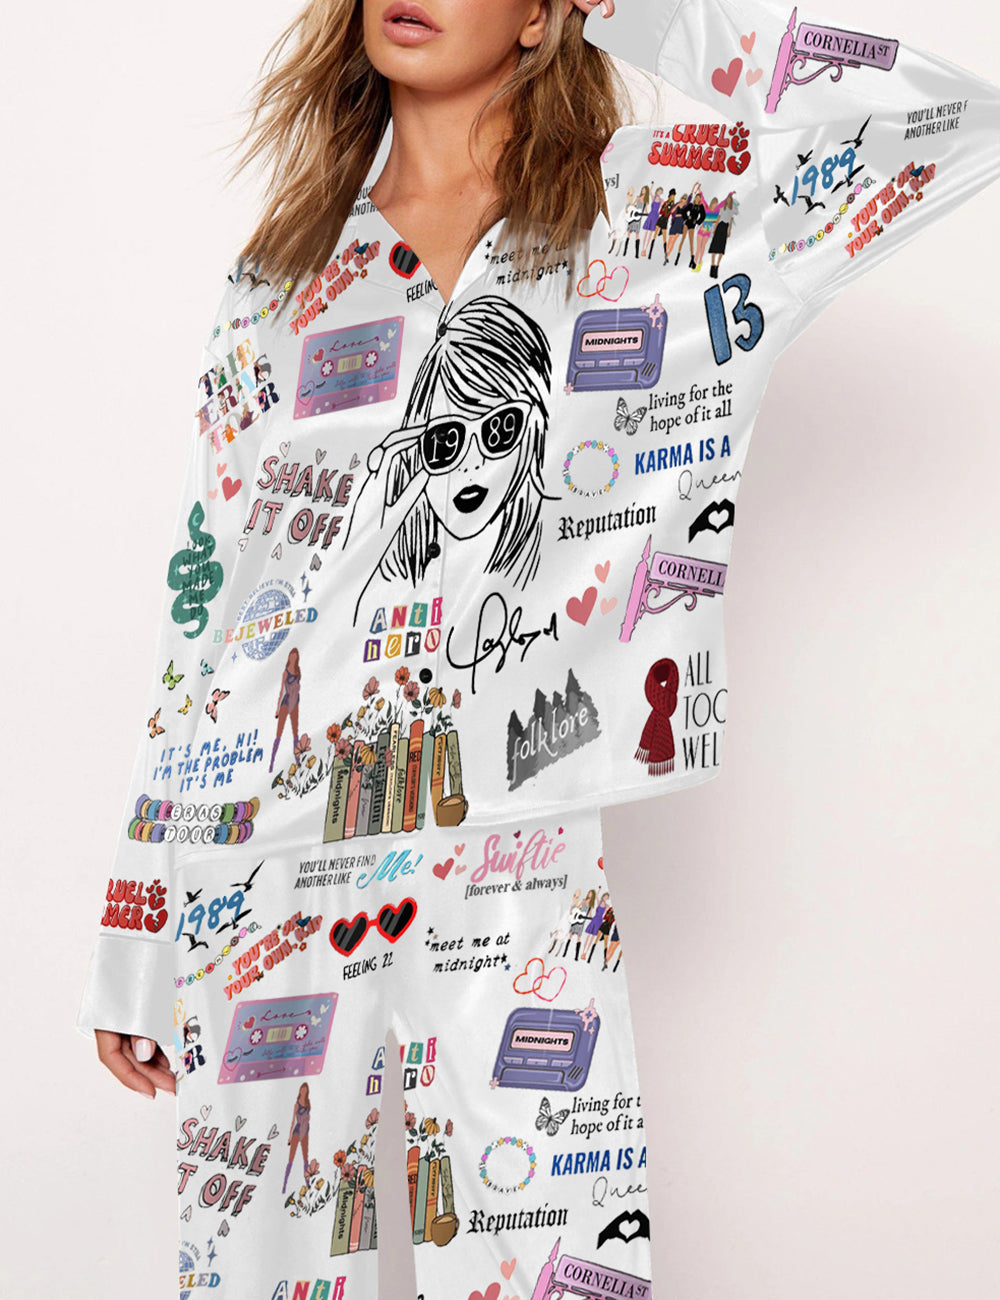 Swiftie White Pajamas - Pajamas Taylor Swift For Fan Gifts - Taylor Swift Pajama For Women